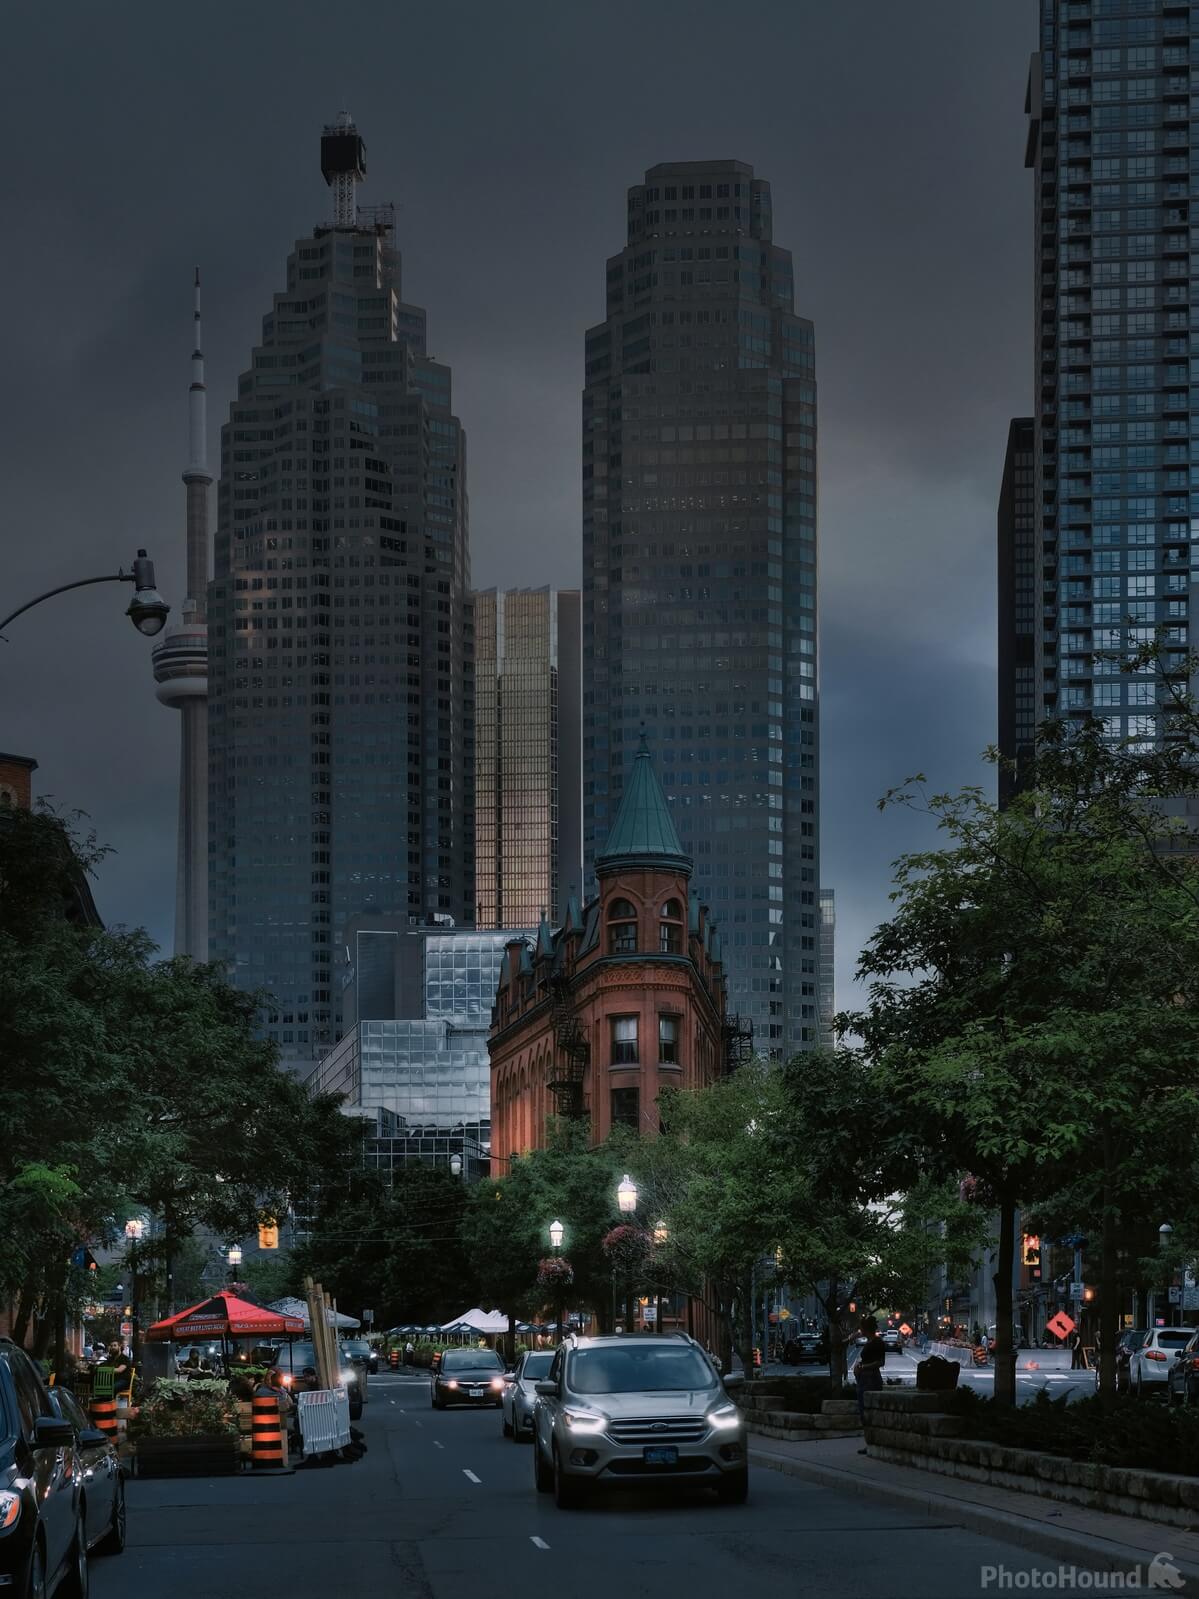 Image of Gooderham Building, Toronto by Vladeta Jericevic